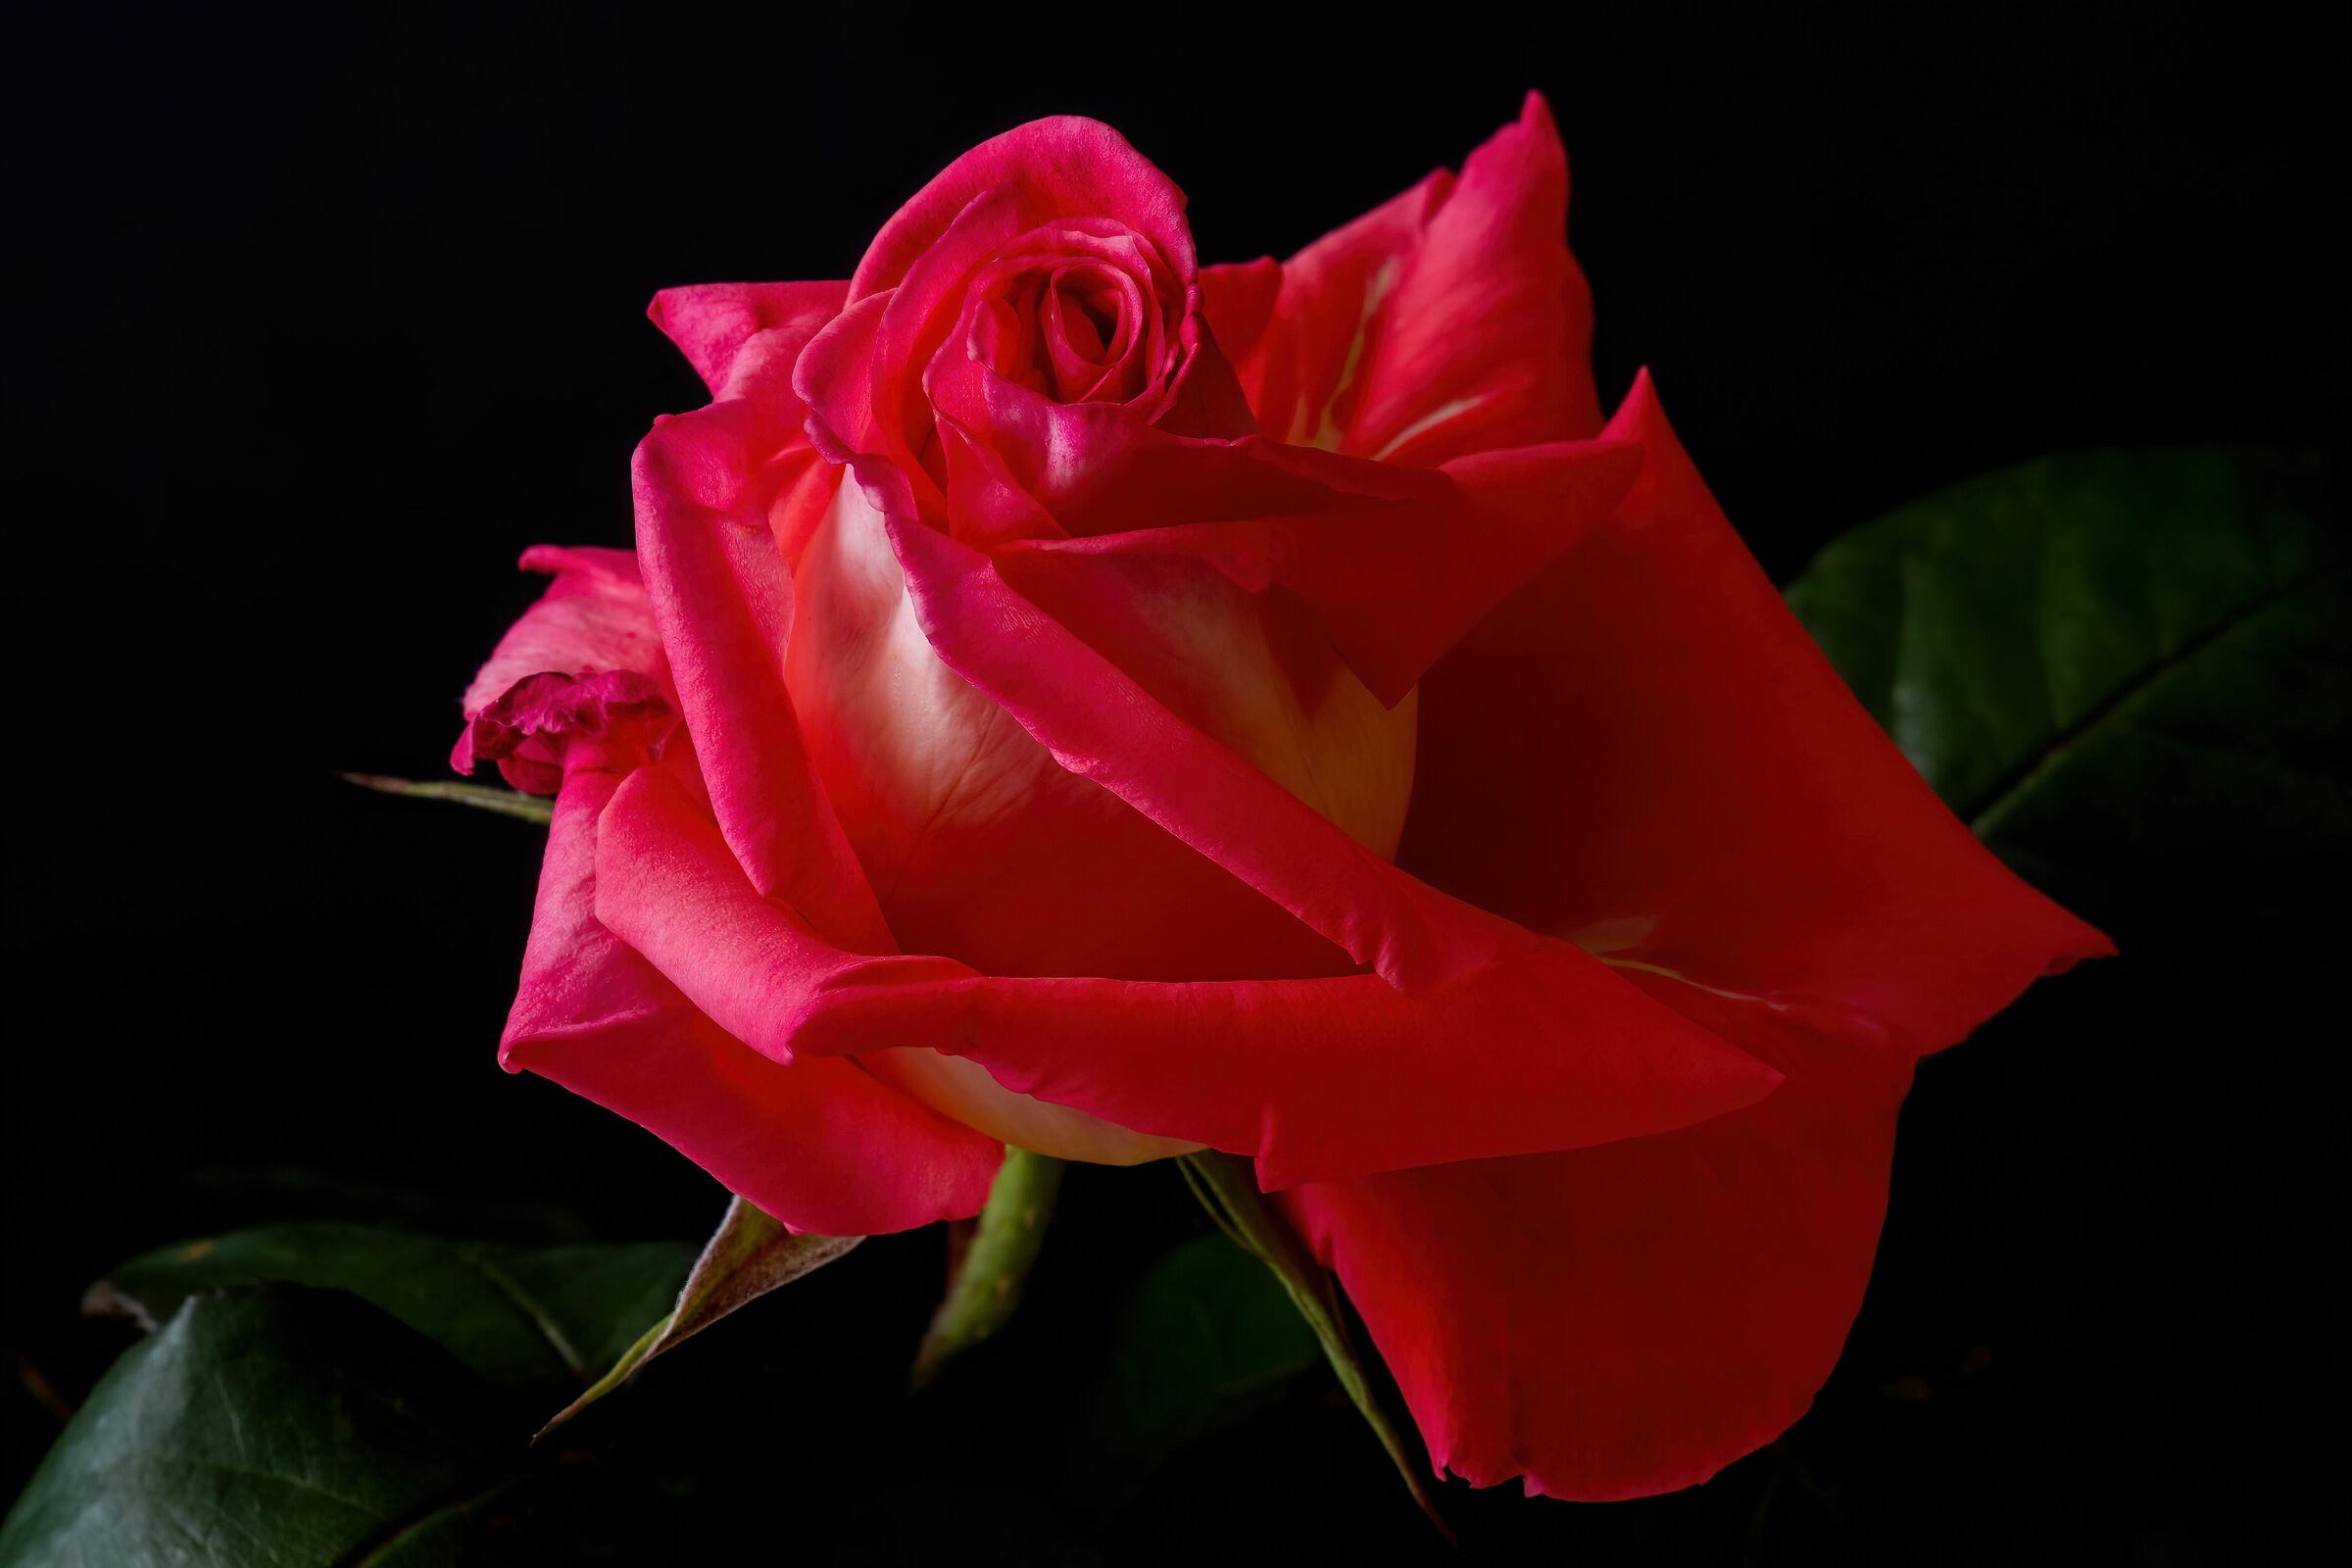 Una rosa per tutte le mamme...